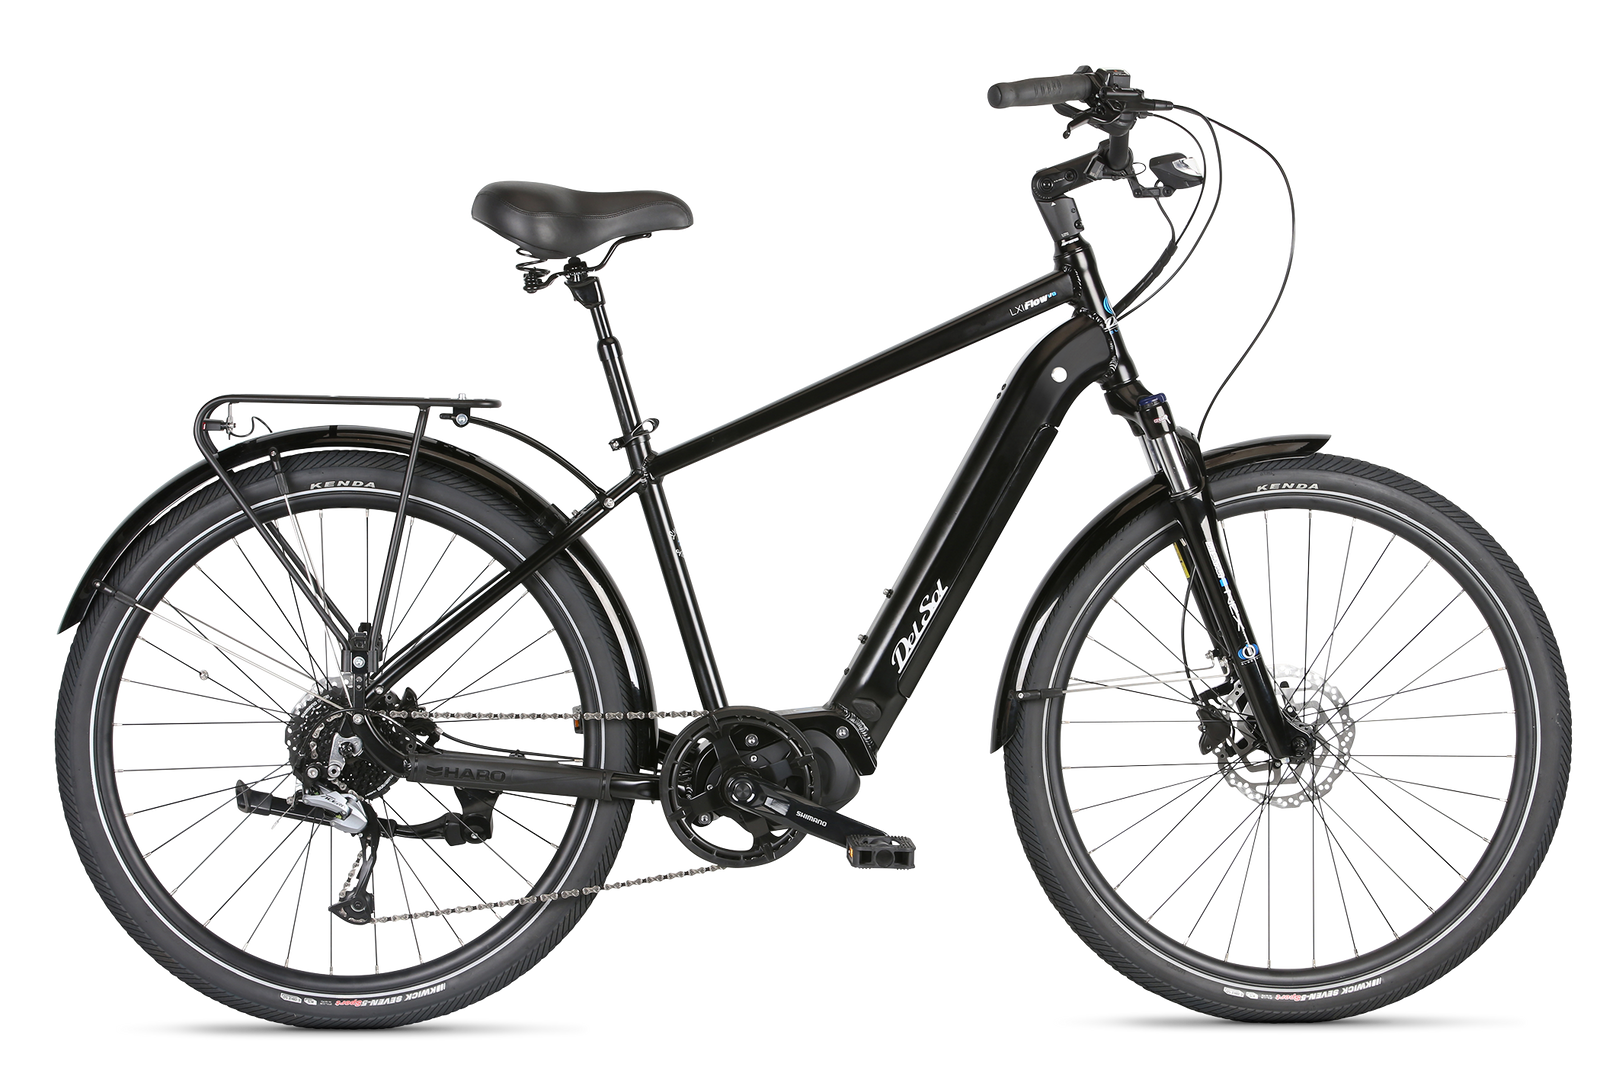 del sol electric bike review